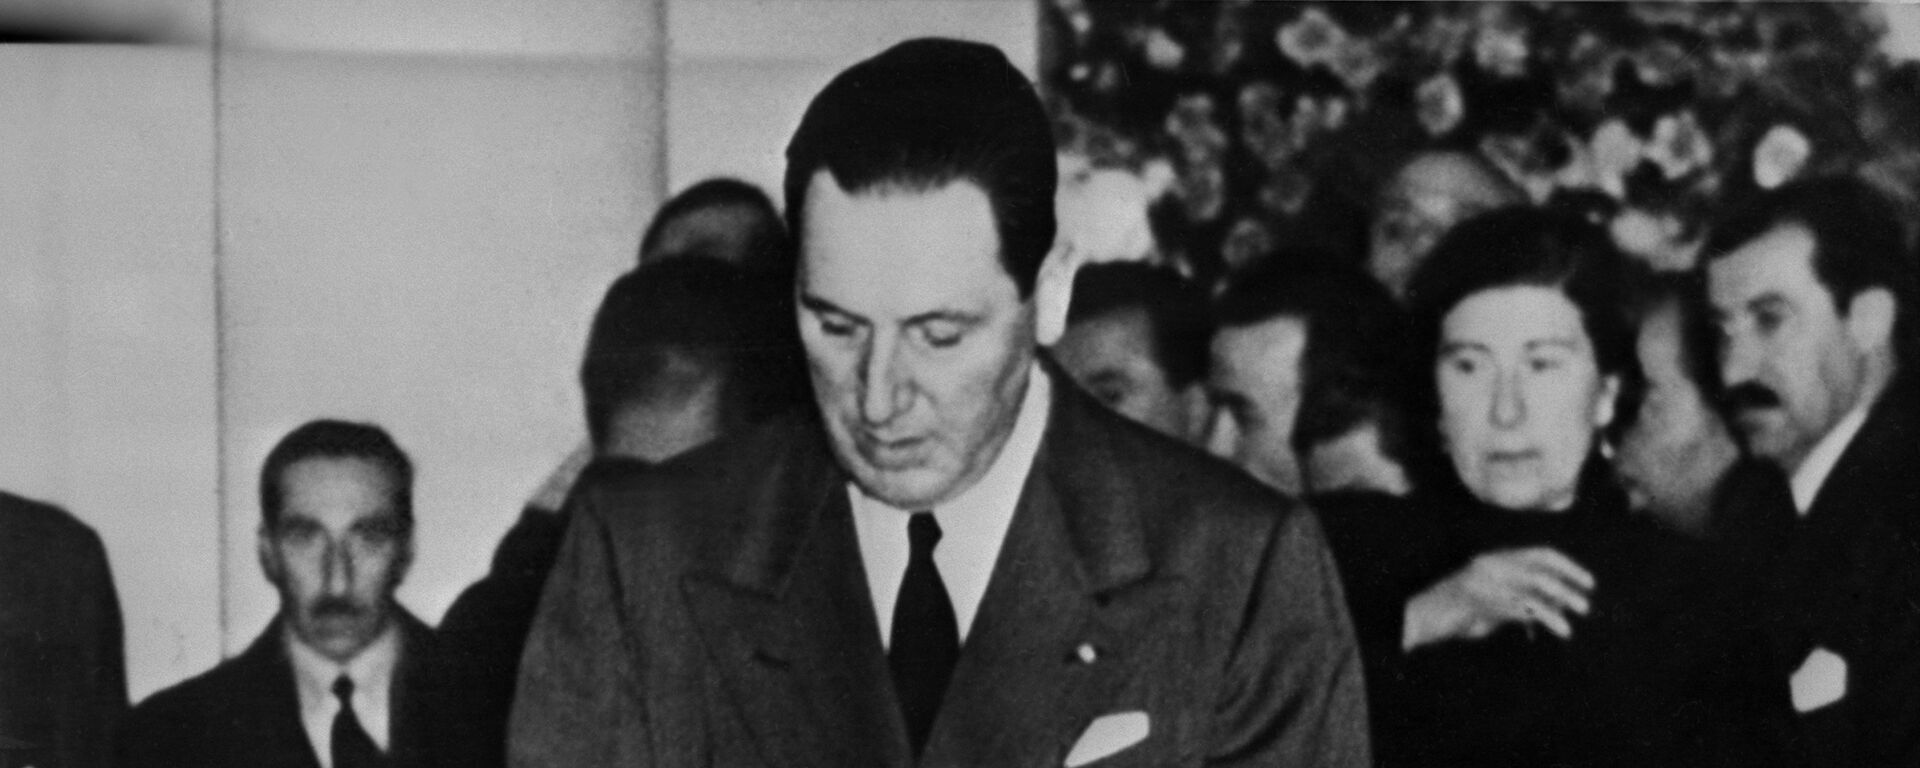 El presidente de Argentina Juan Domingo Perón - Sputnik Mundo, 1920, 01.07.2019